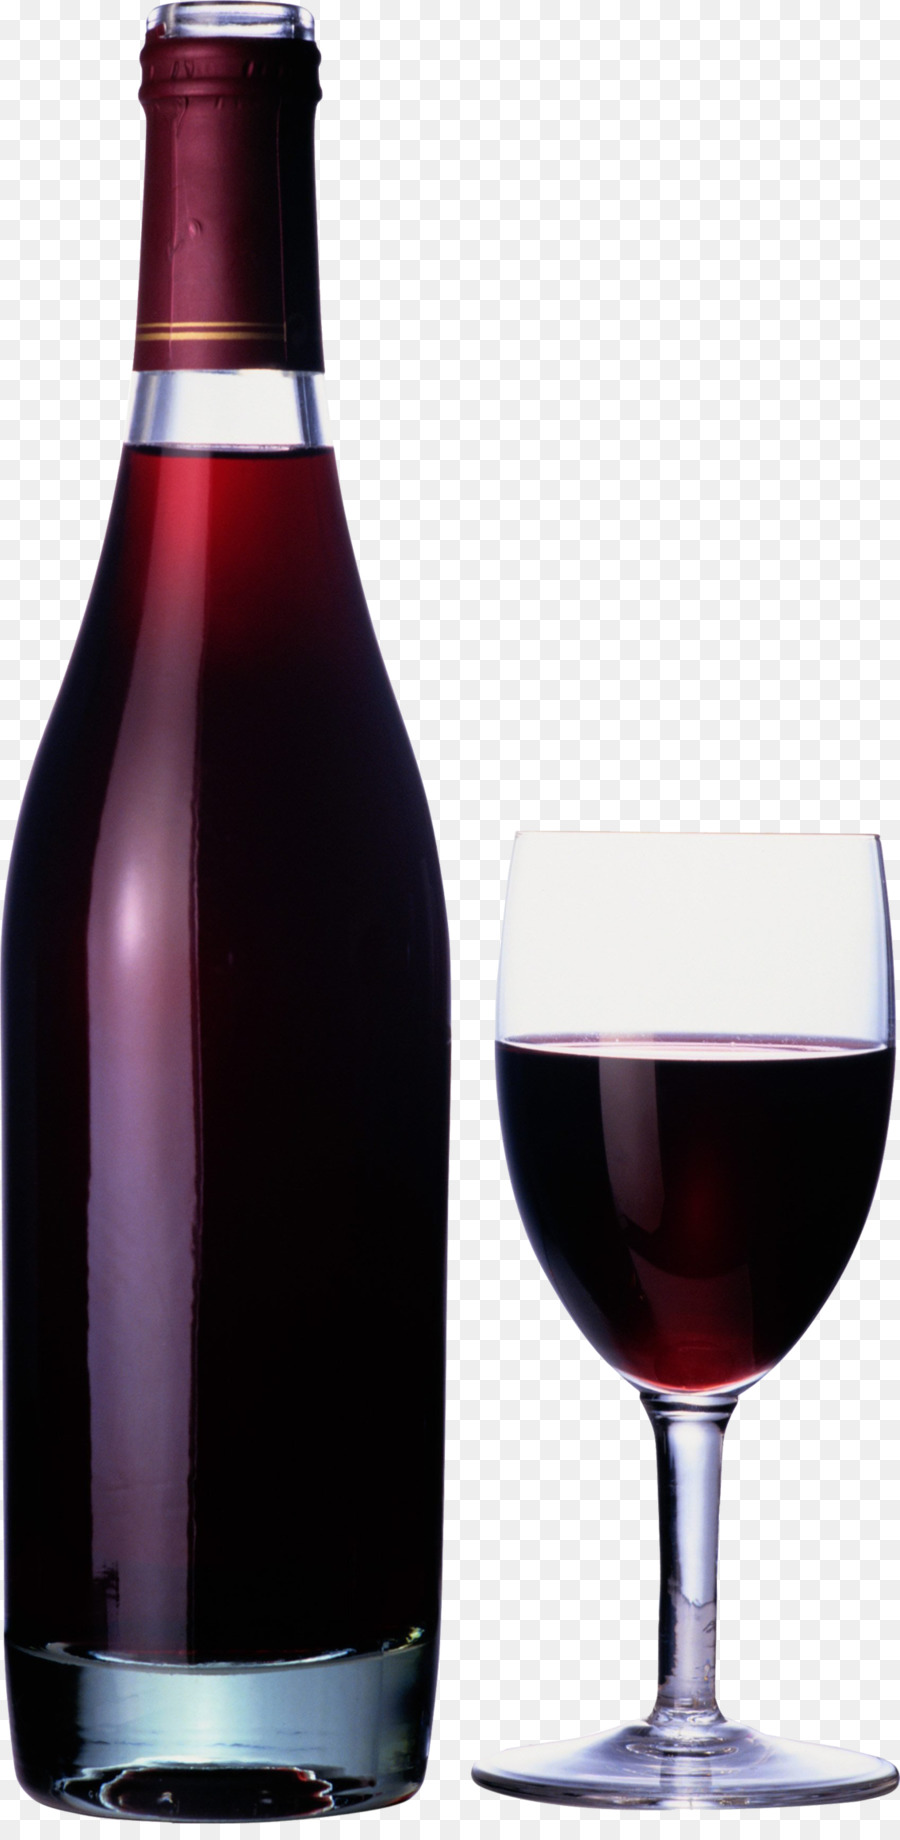 Wine Bottle Clip art - wine png download - 1135*2300 - Free Transparent Wine png Download.